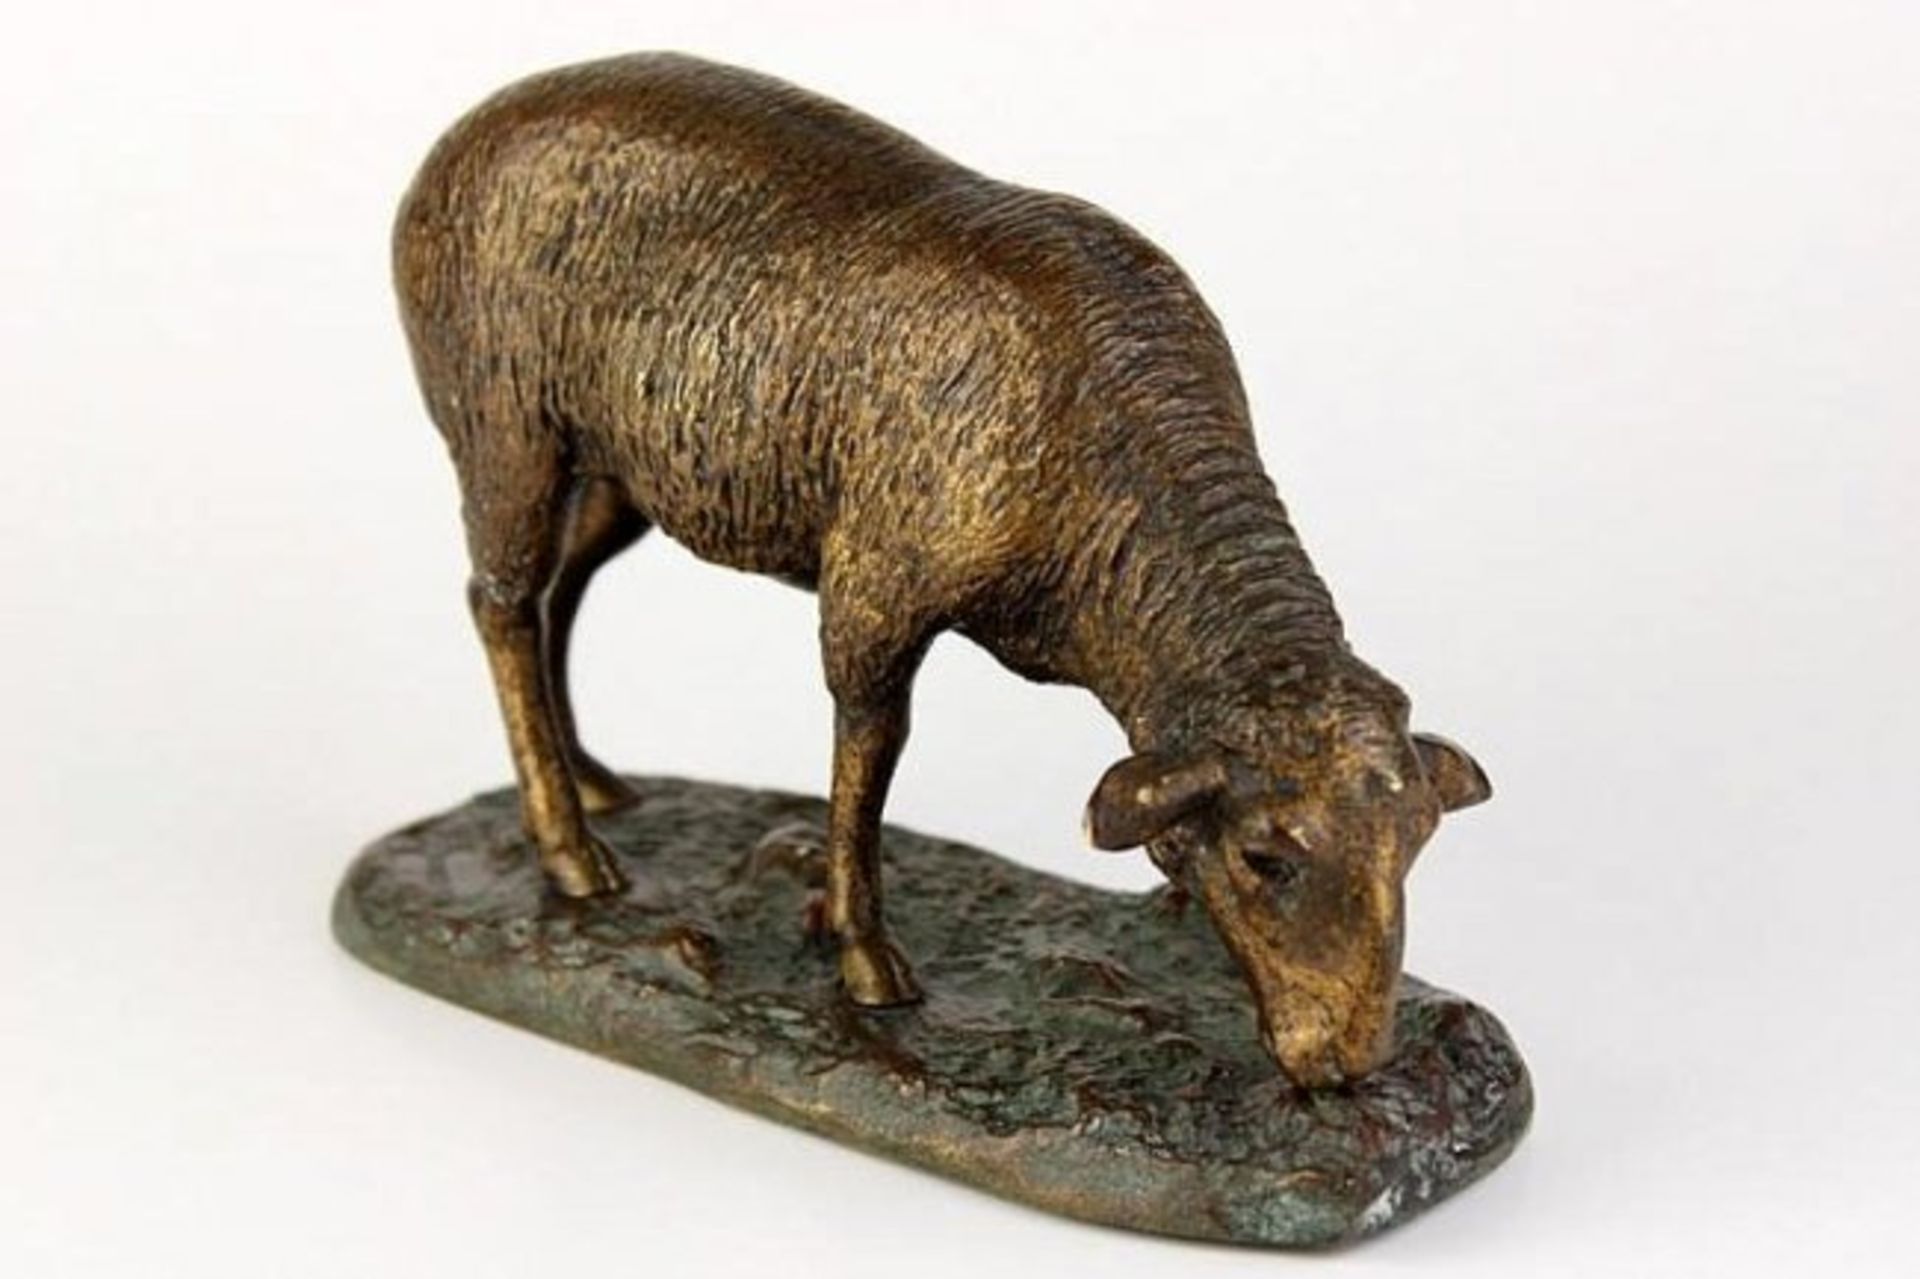 Antique E. Sienard bronze sculpture “Sheep” - Image 2 of 3